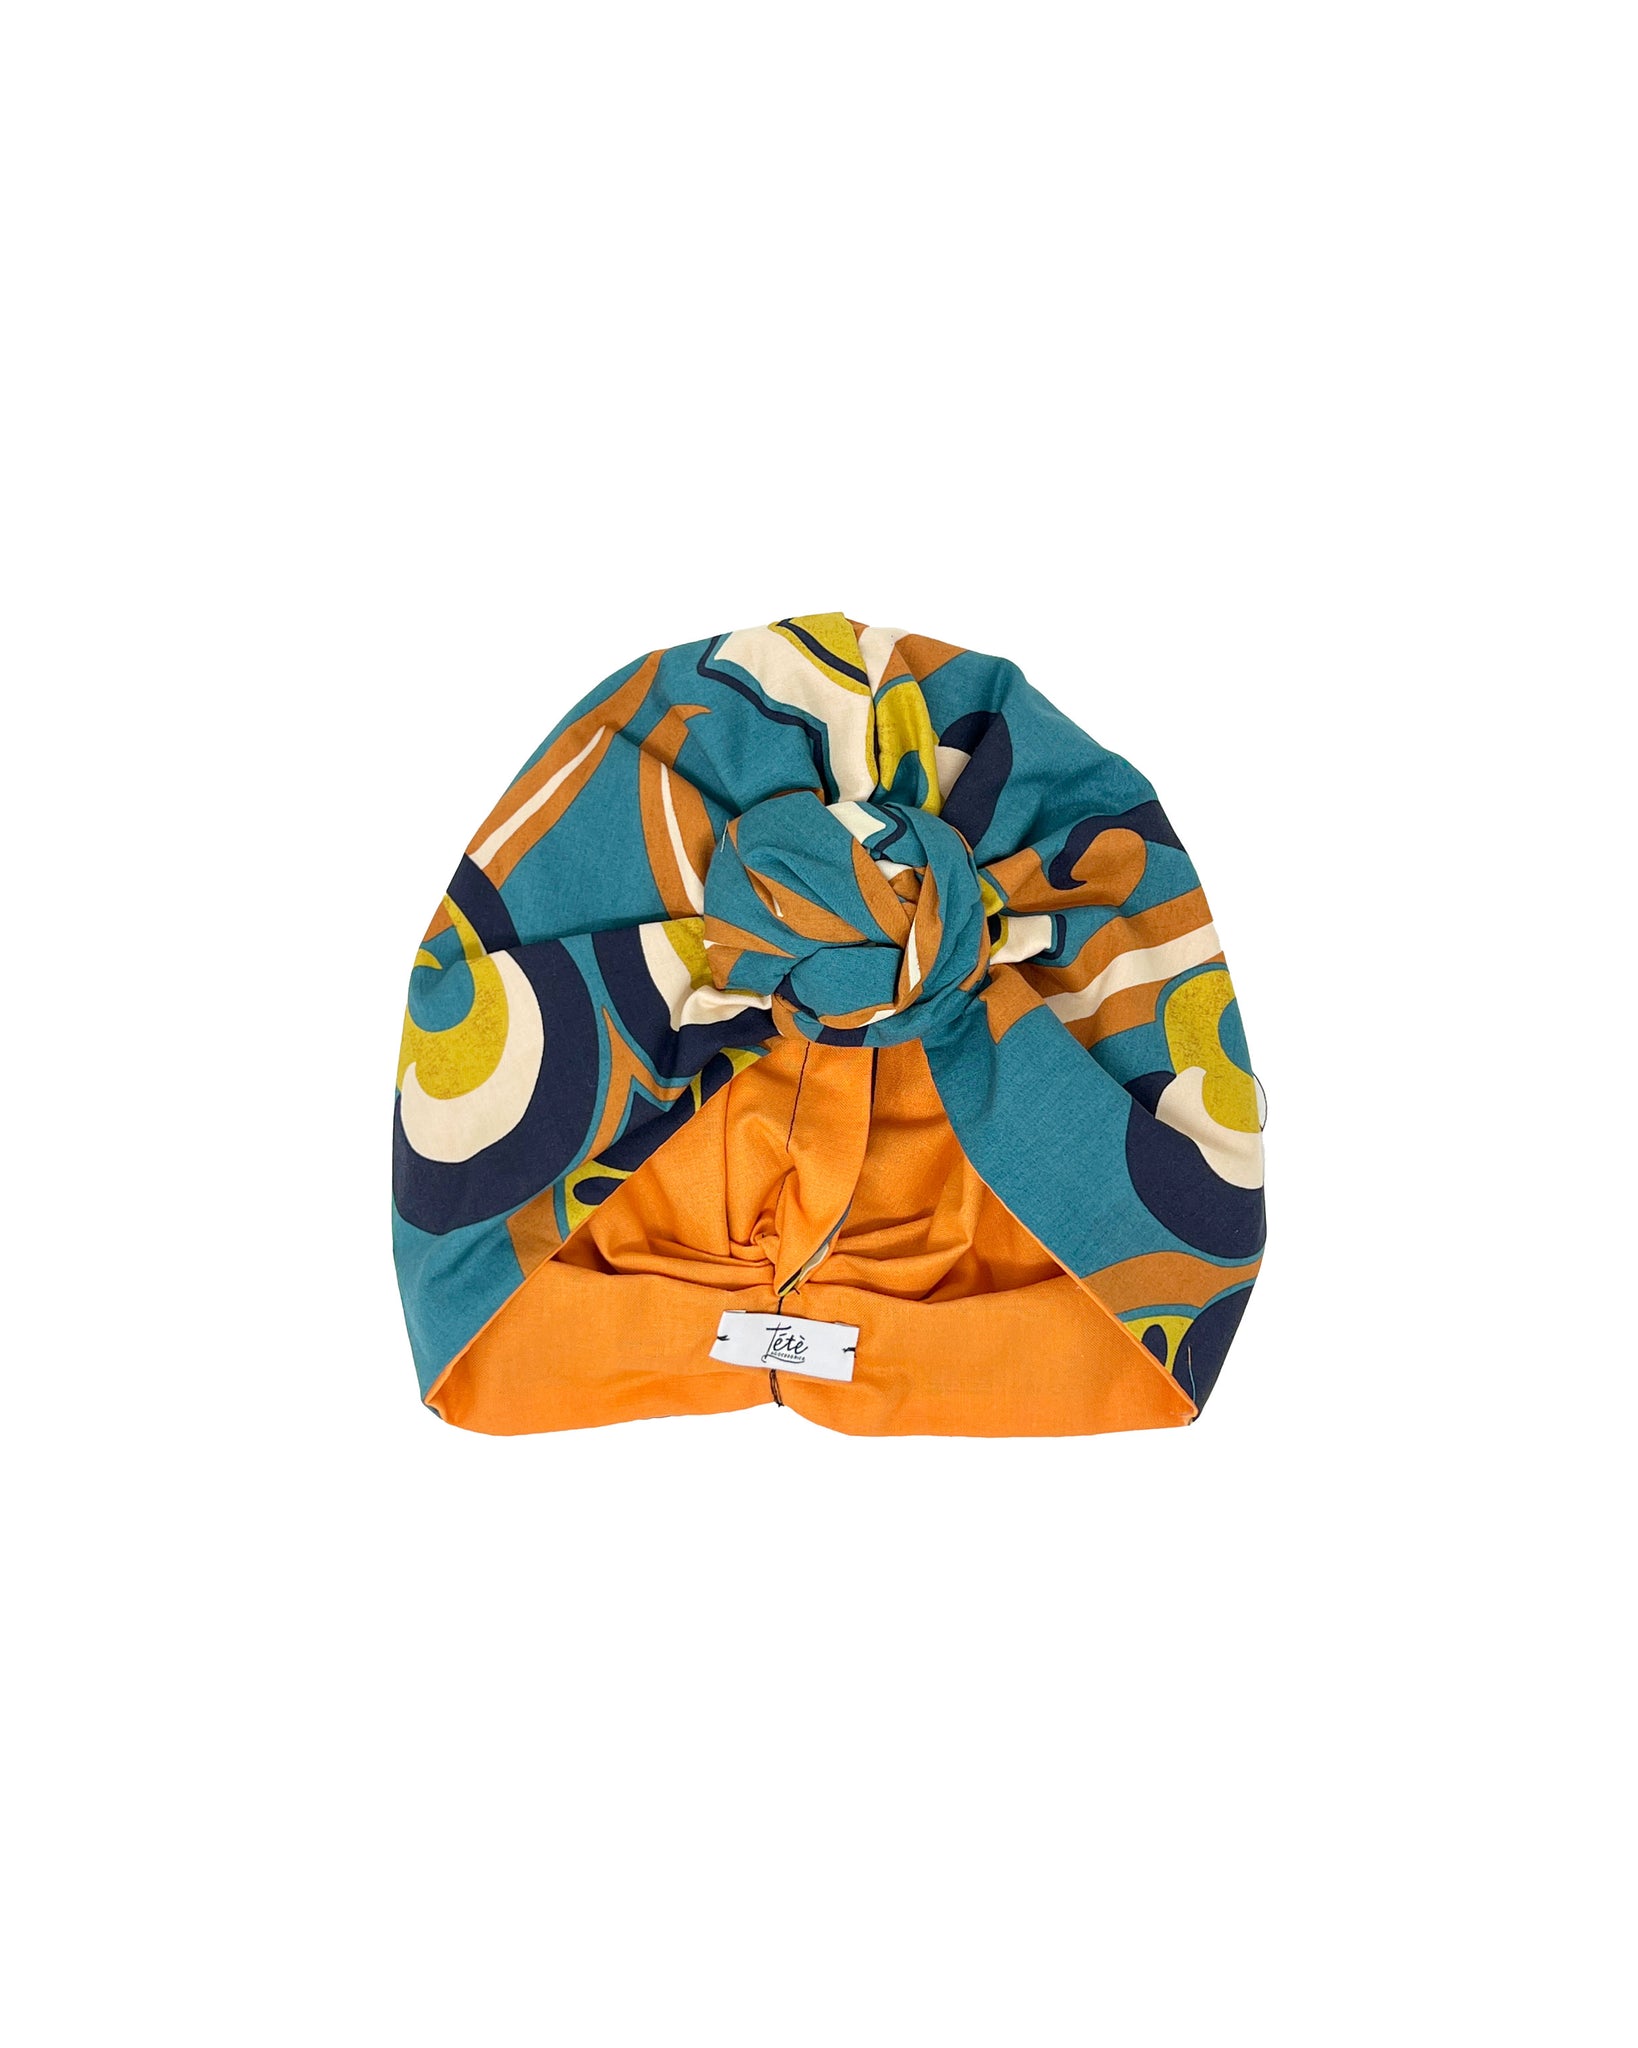 Octanium cotton turban with orange yellow and blue cashmere design